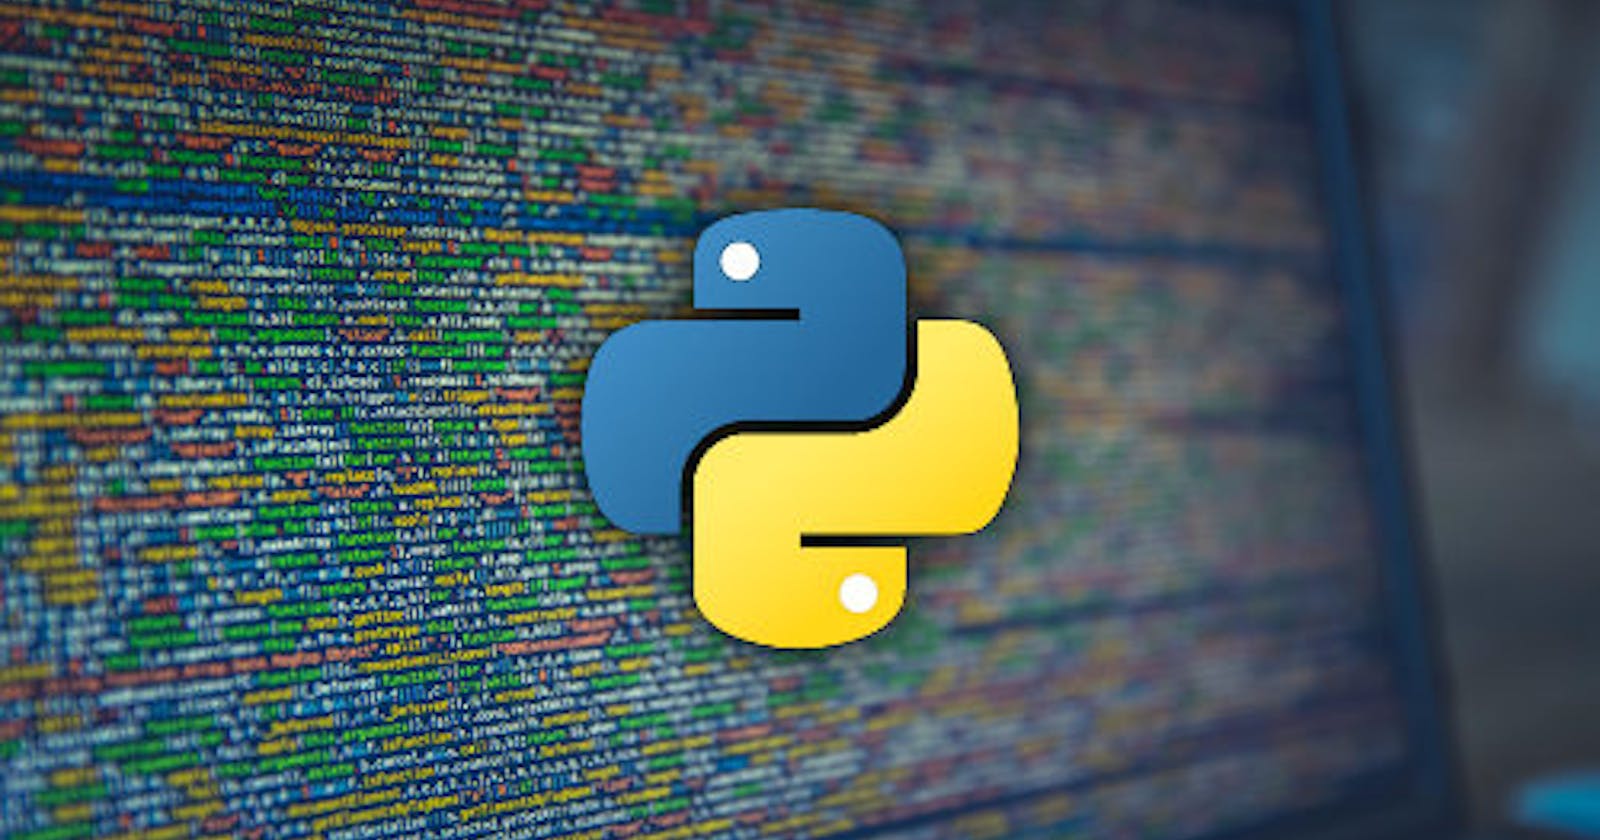 How do I get started with Python?